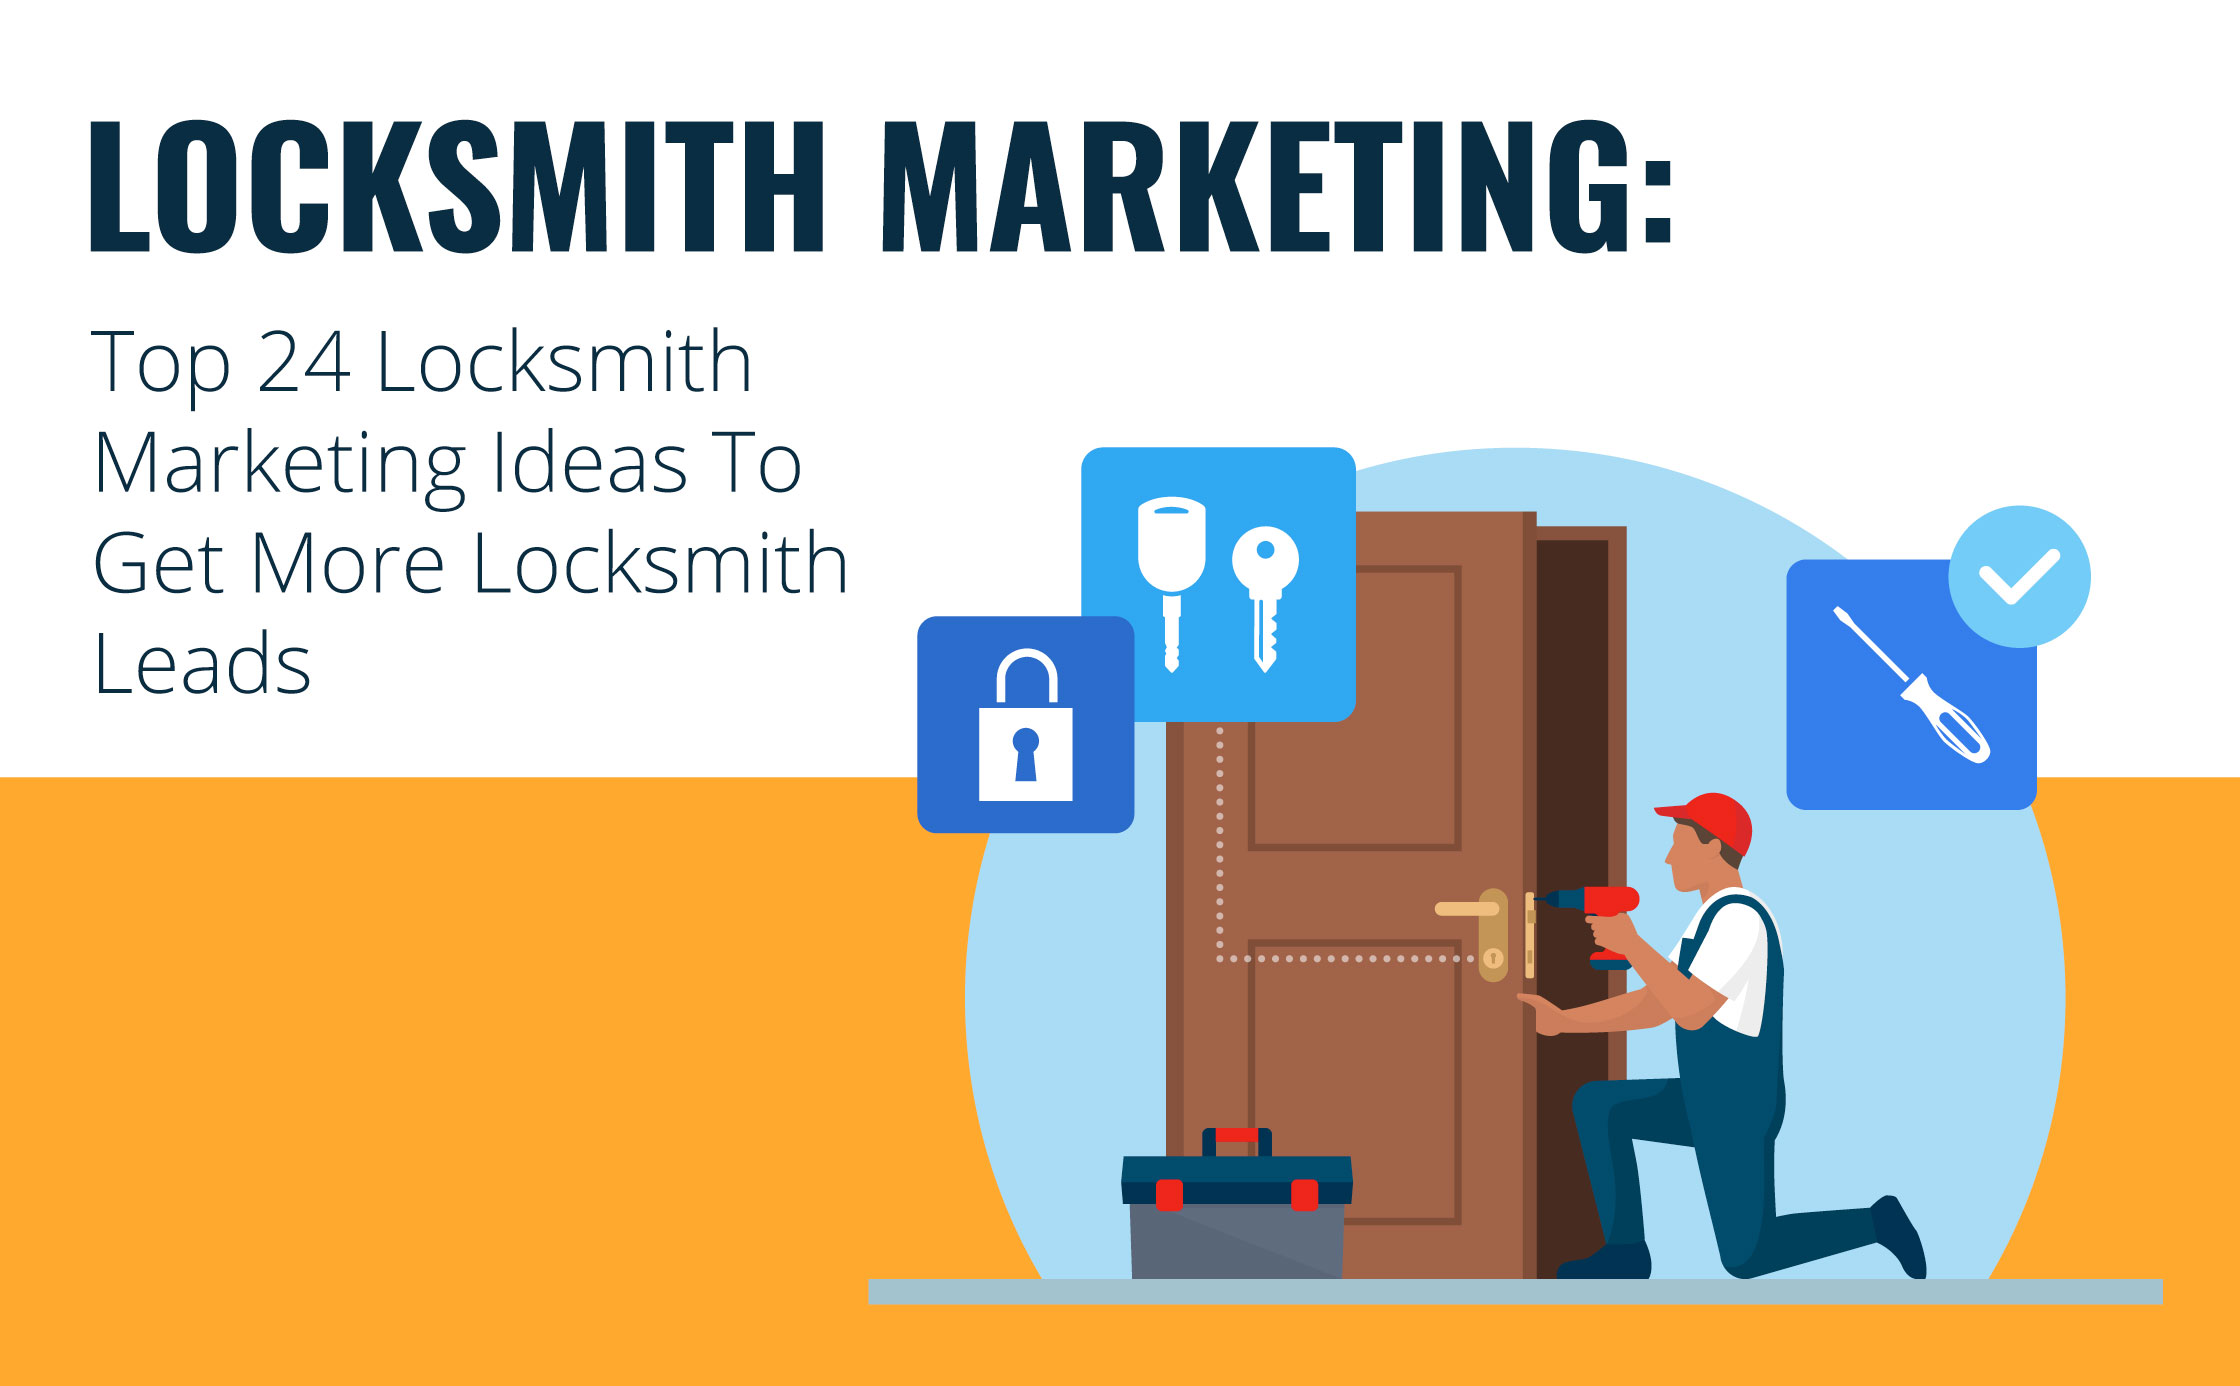 Top 24 Locksmith Marketing Ideas To Get More Locksmith Leads